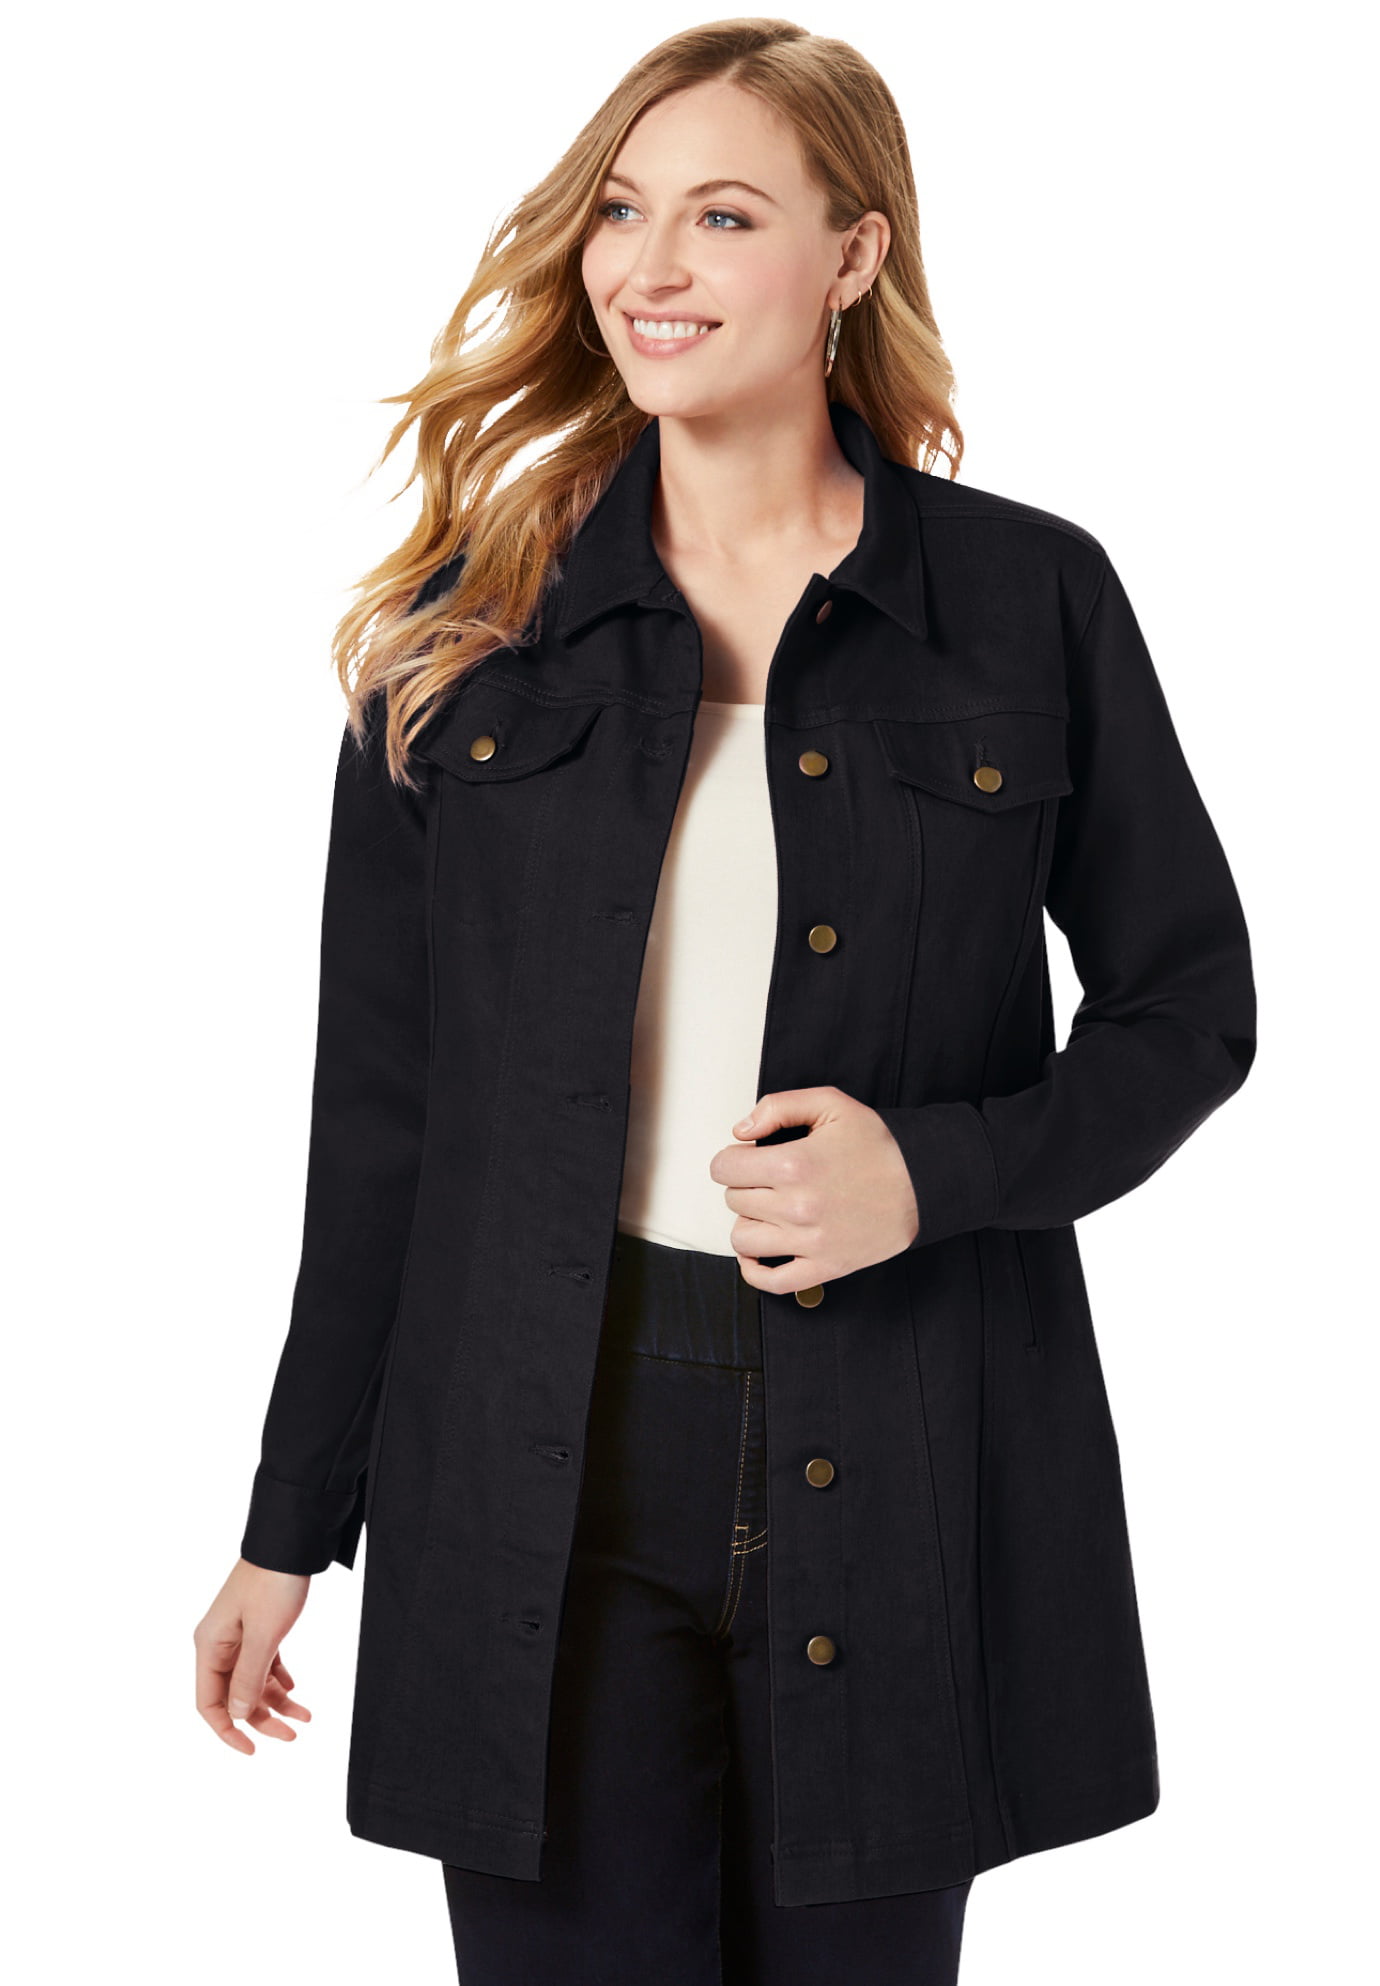 Jessica London - Jessica London Women's Plus Size Long Denim Jacket ...